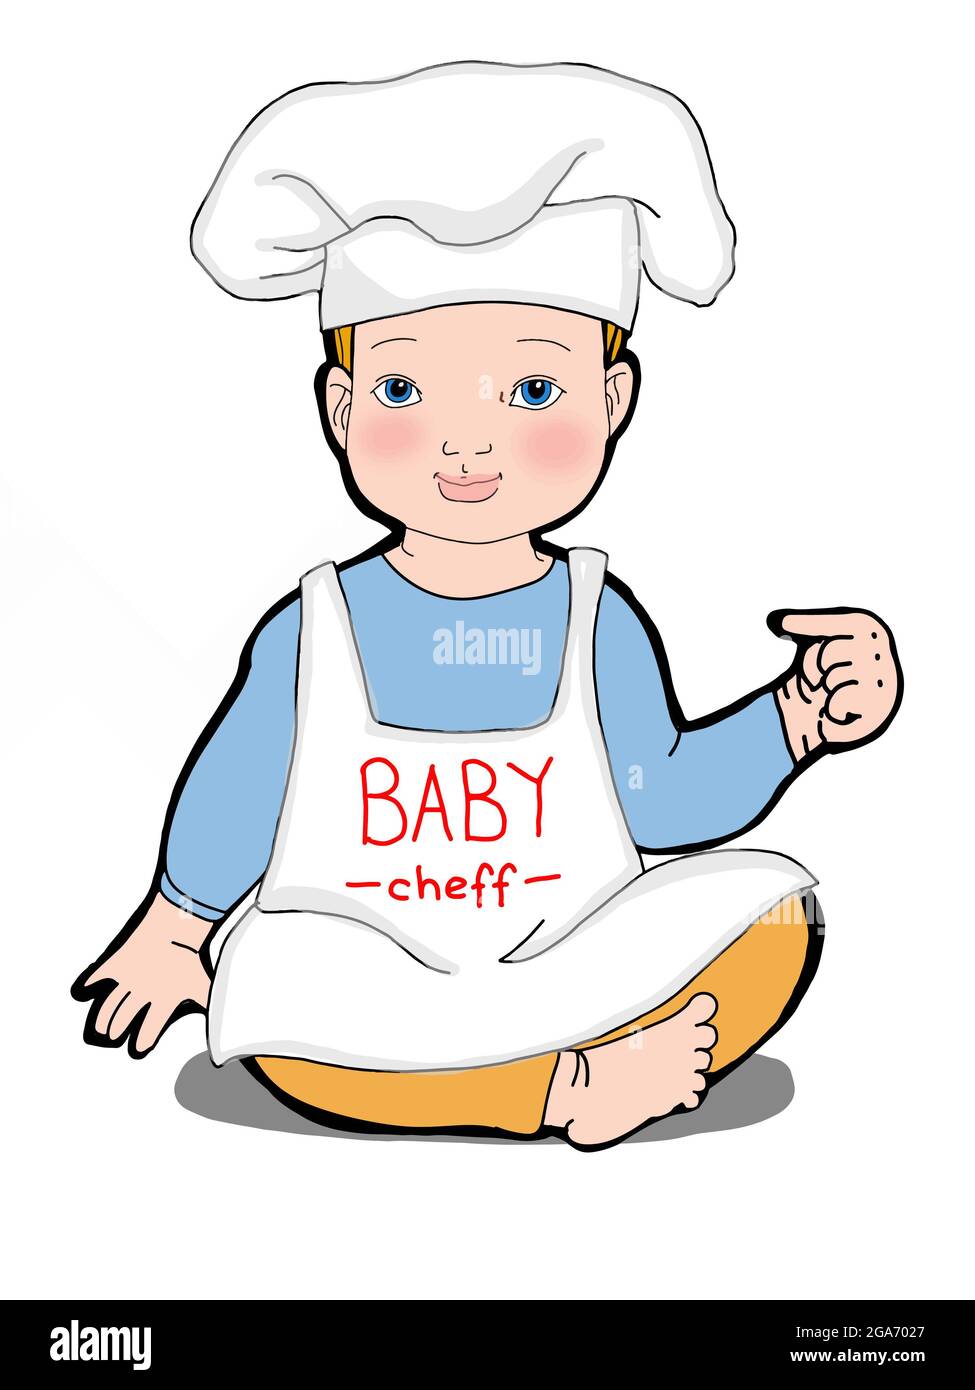 Cartoon, baby, cheff  characters  illustration drawing . Stock Photo